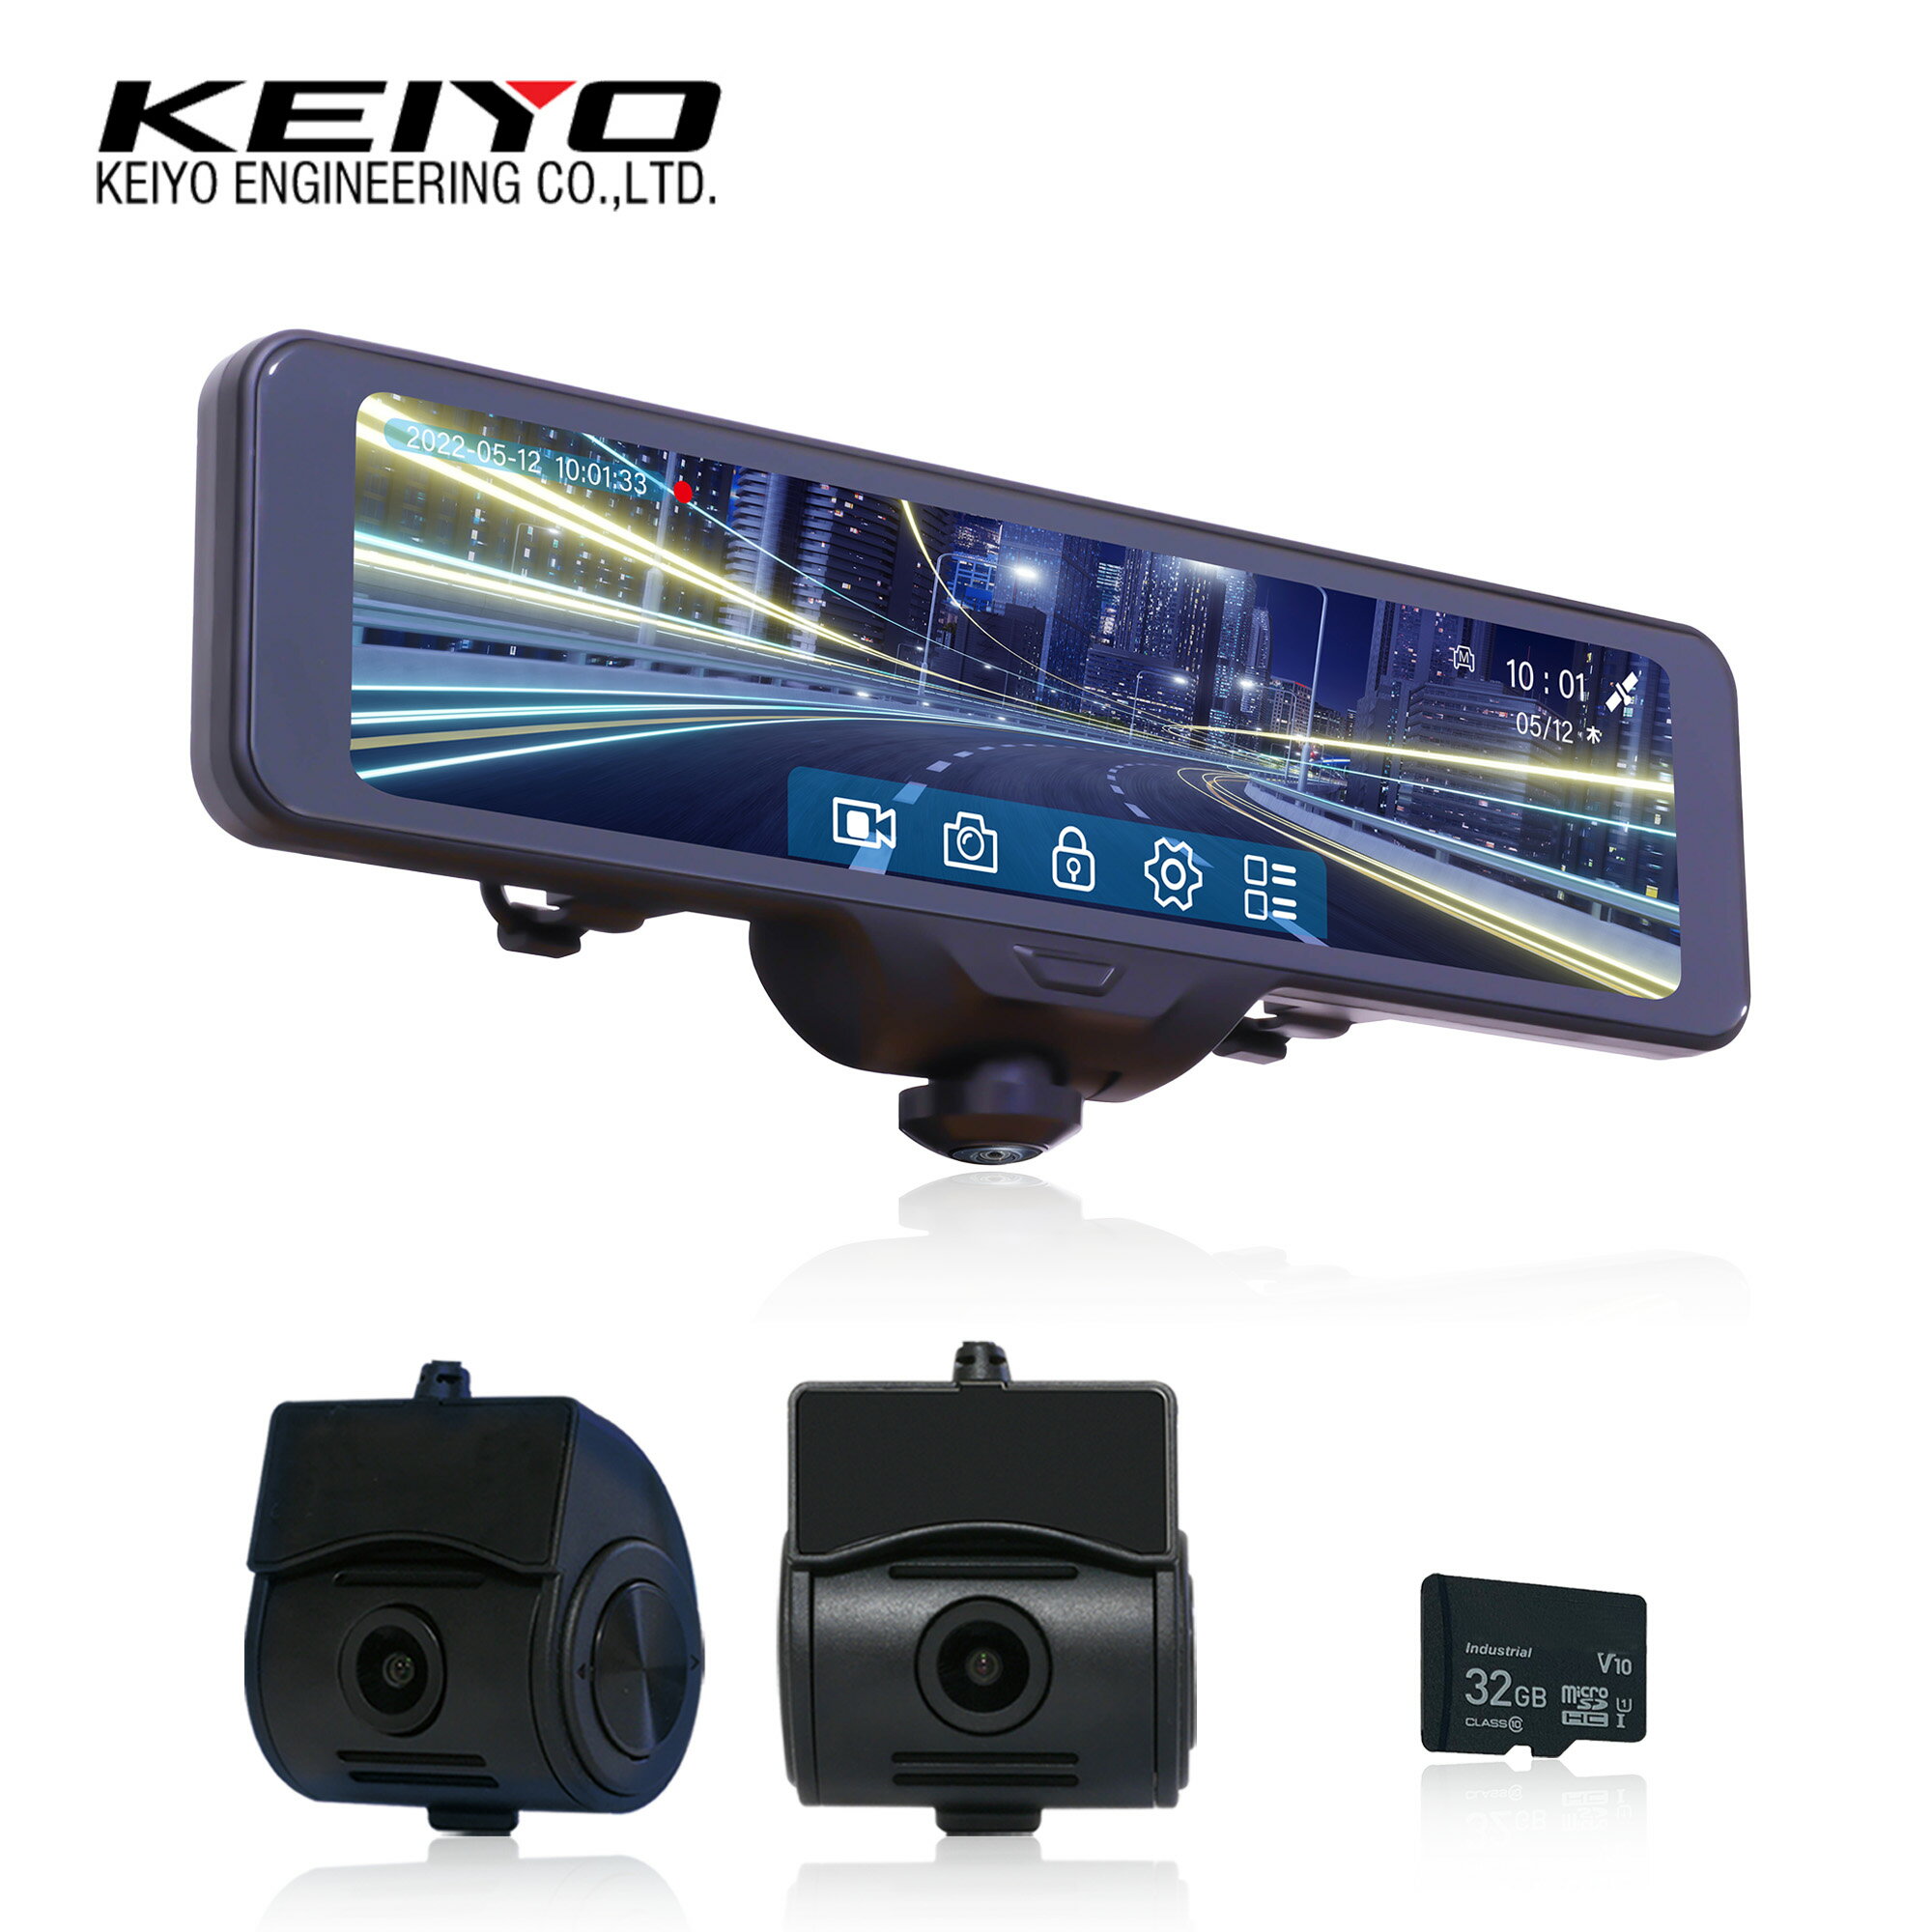 KEIYO ドライブレコーダー ミラー型 360°全方位 3カメラ 前後分離式 車内 左右 車体側面まで録画 10.66インチ タッチパネル スタービス 衝撃検知 駐車監視システム搭載 バンド固定式 シガー/常時電源 SDカード32G付 AN-R106Pro